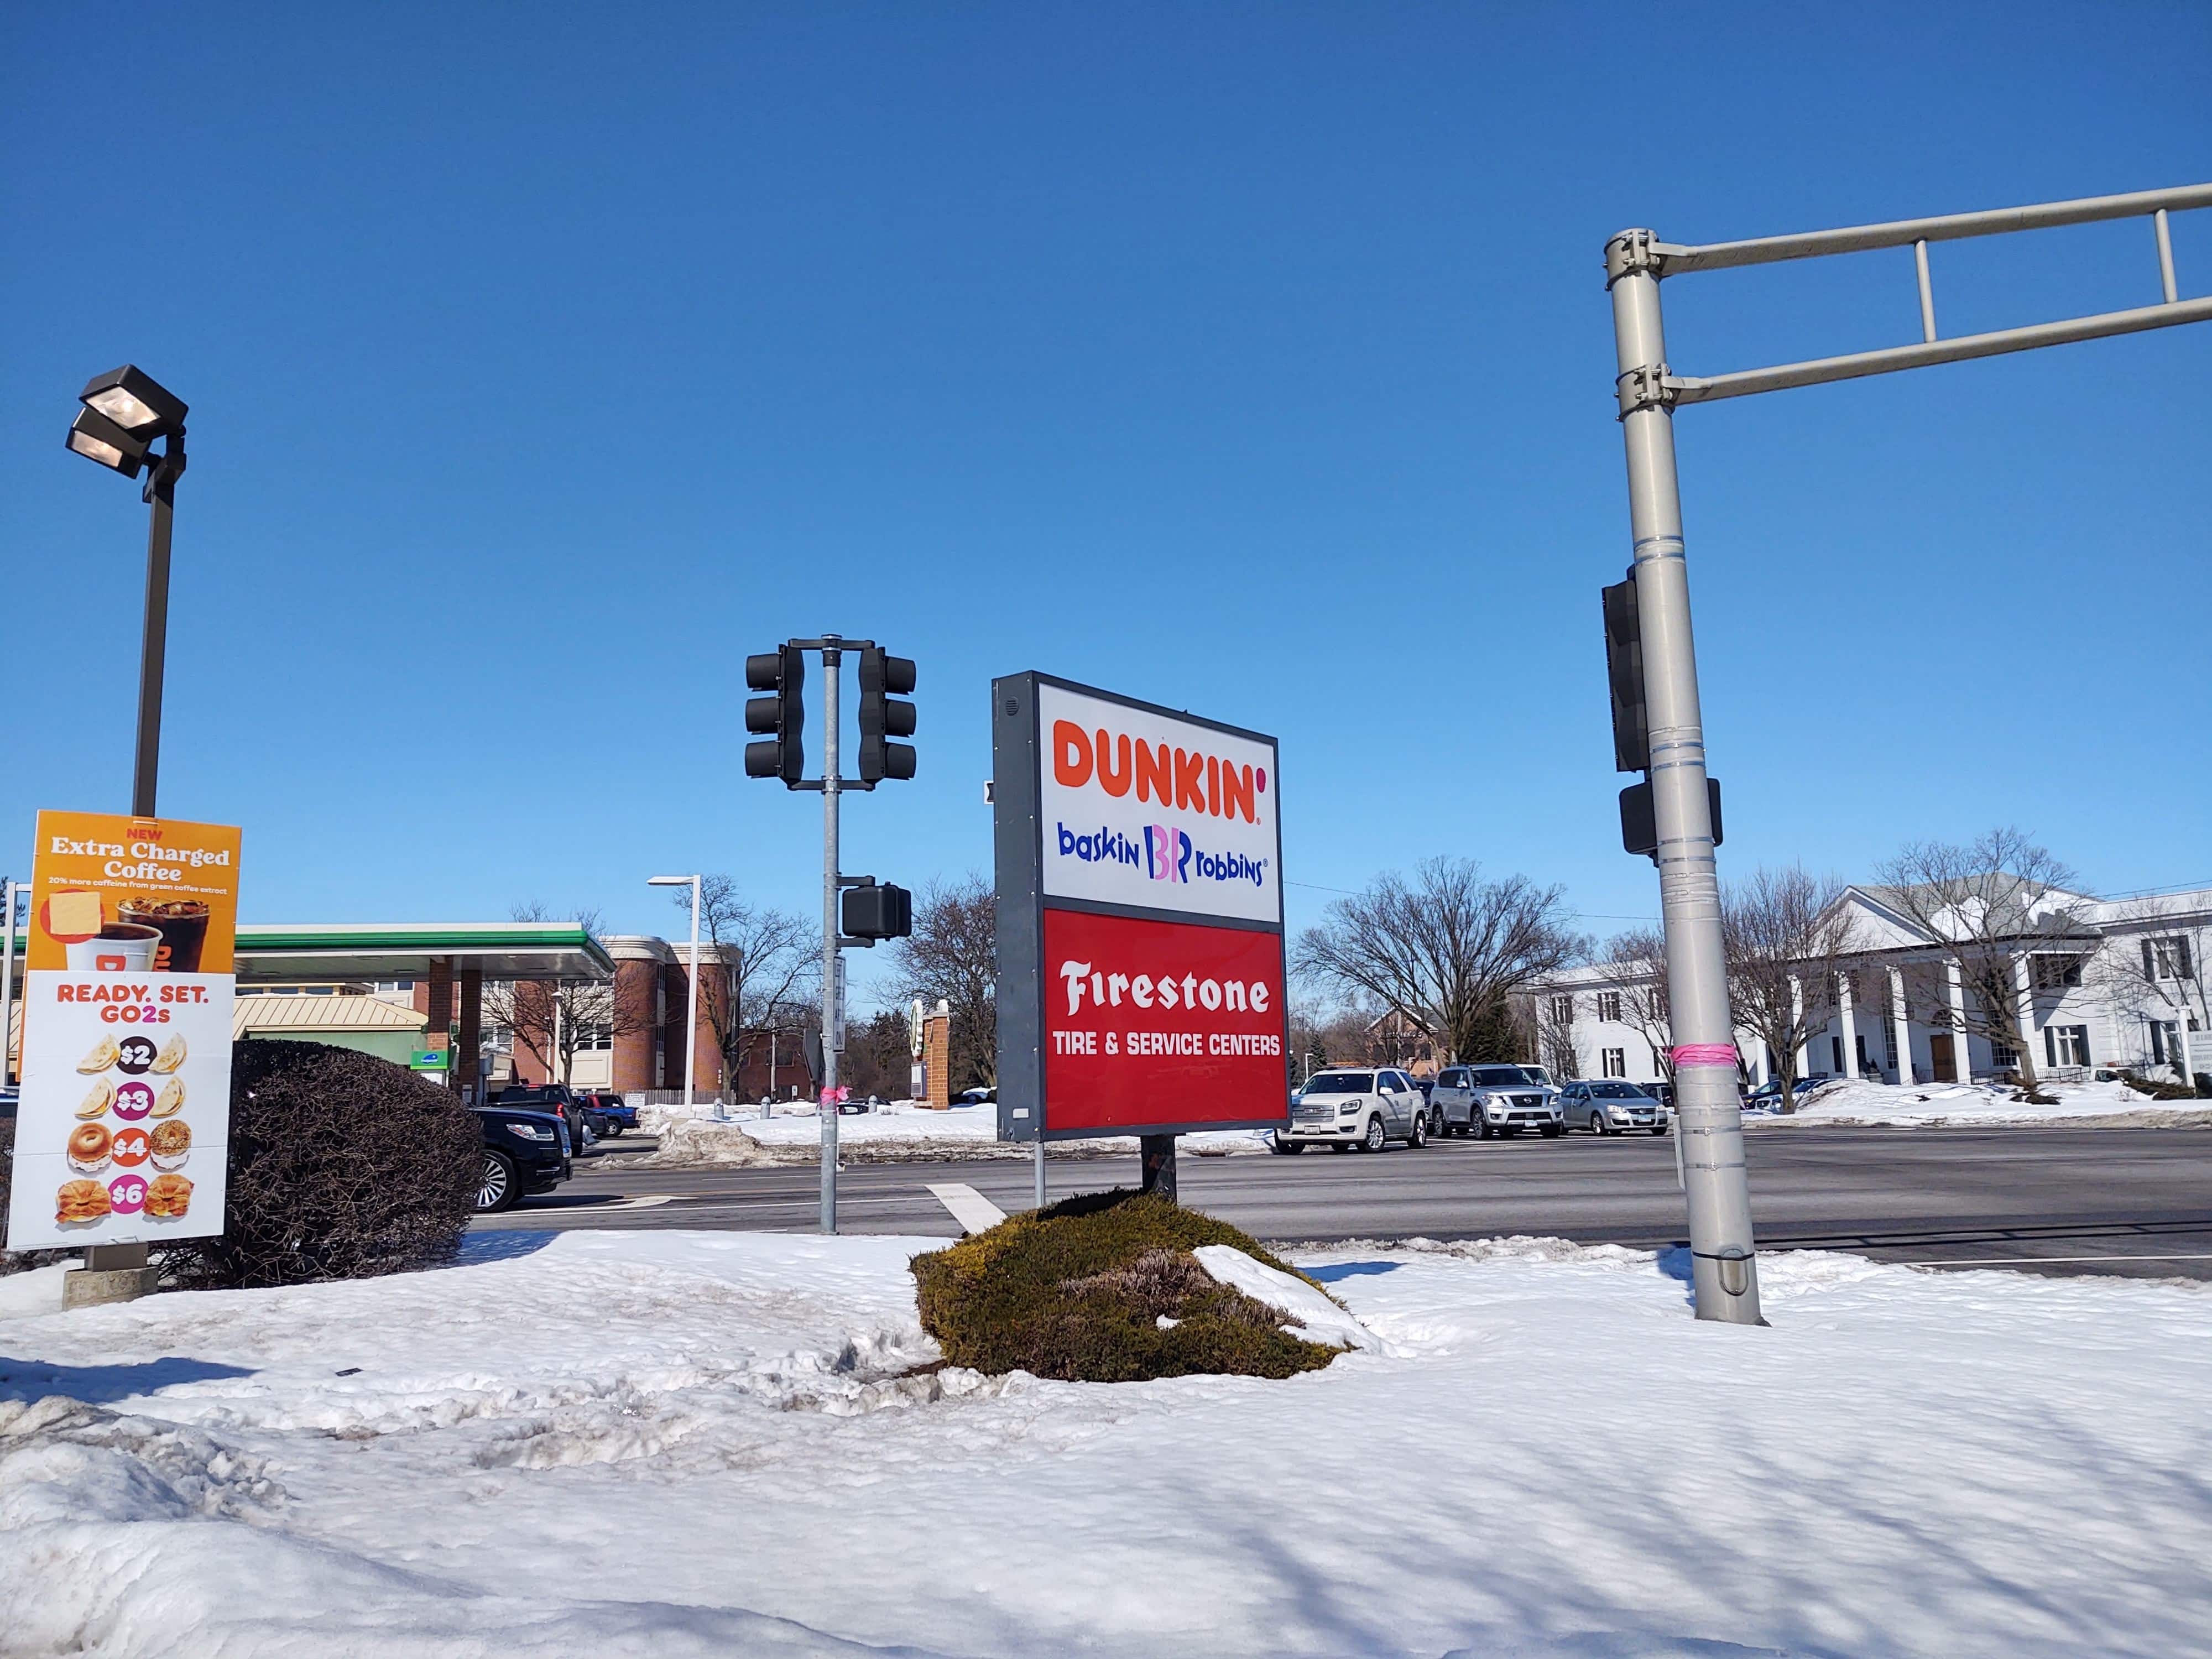 Dunkin’ - Hinsdale (IL 60521), US, nearest coffee place